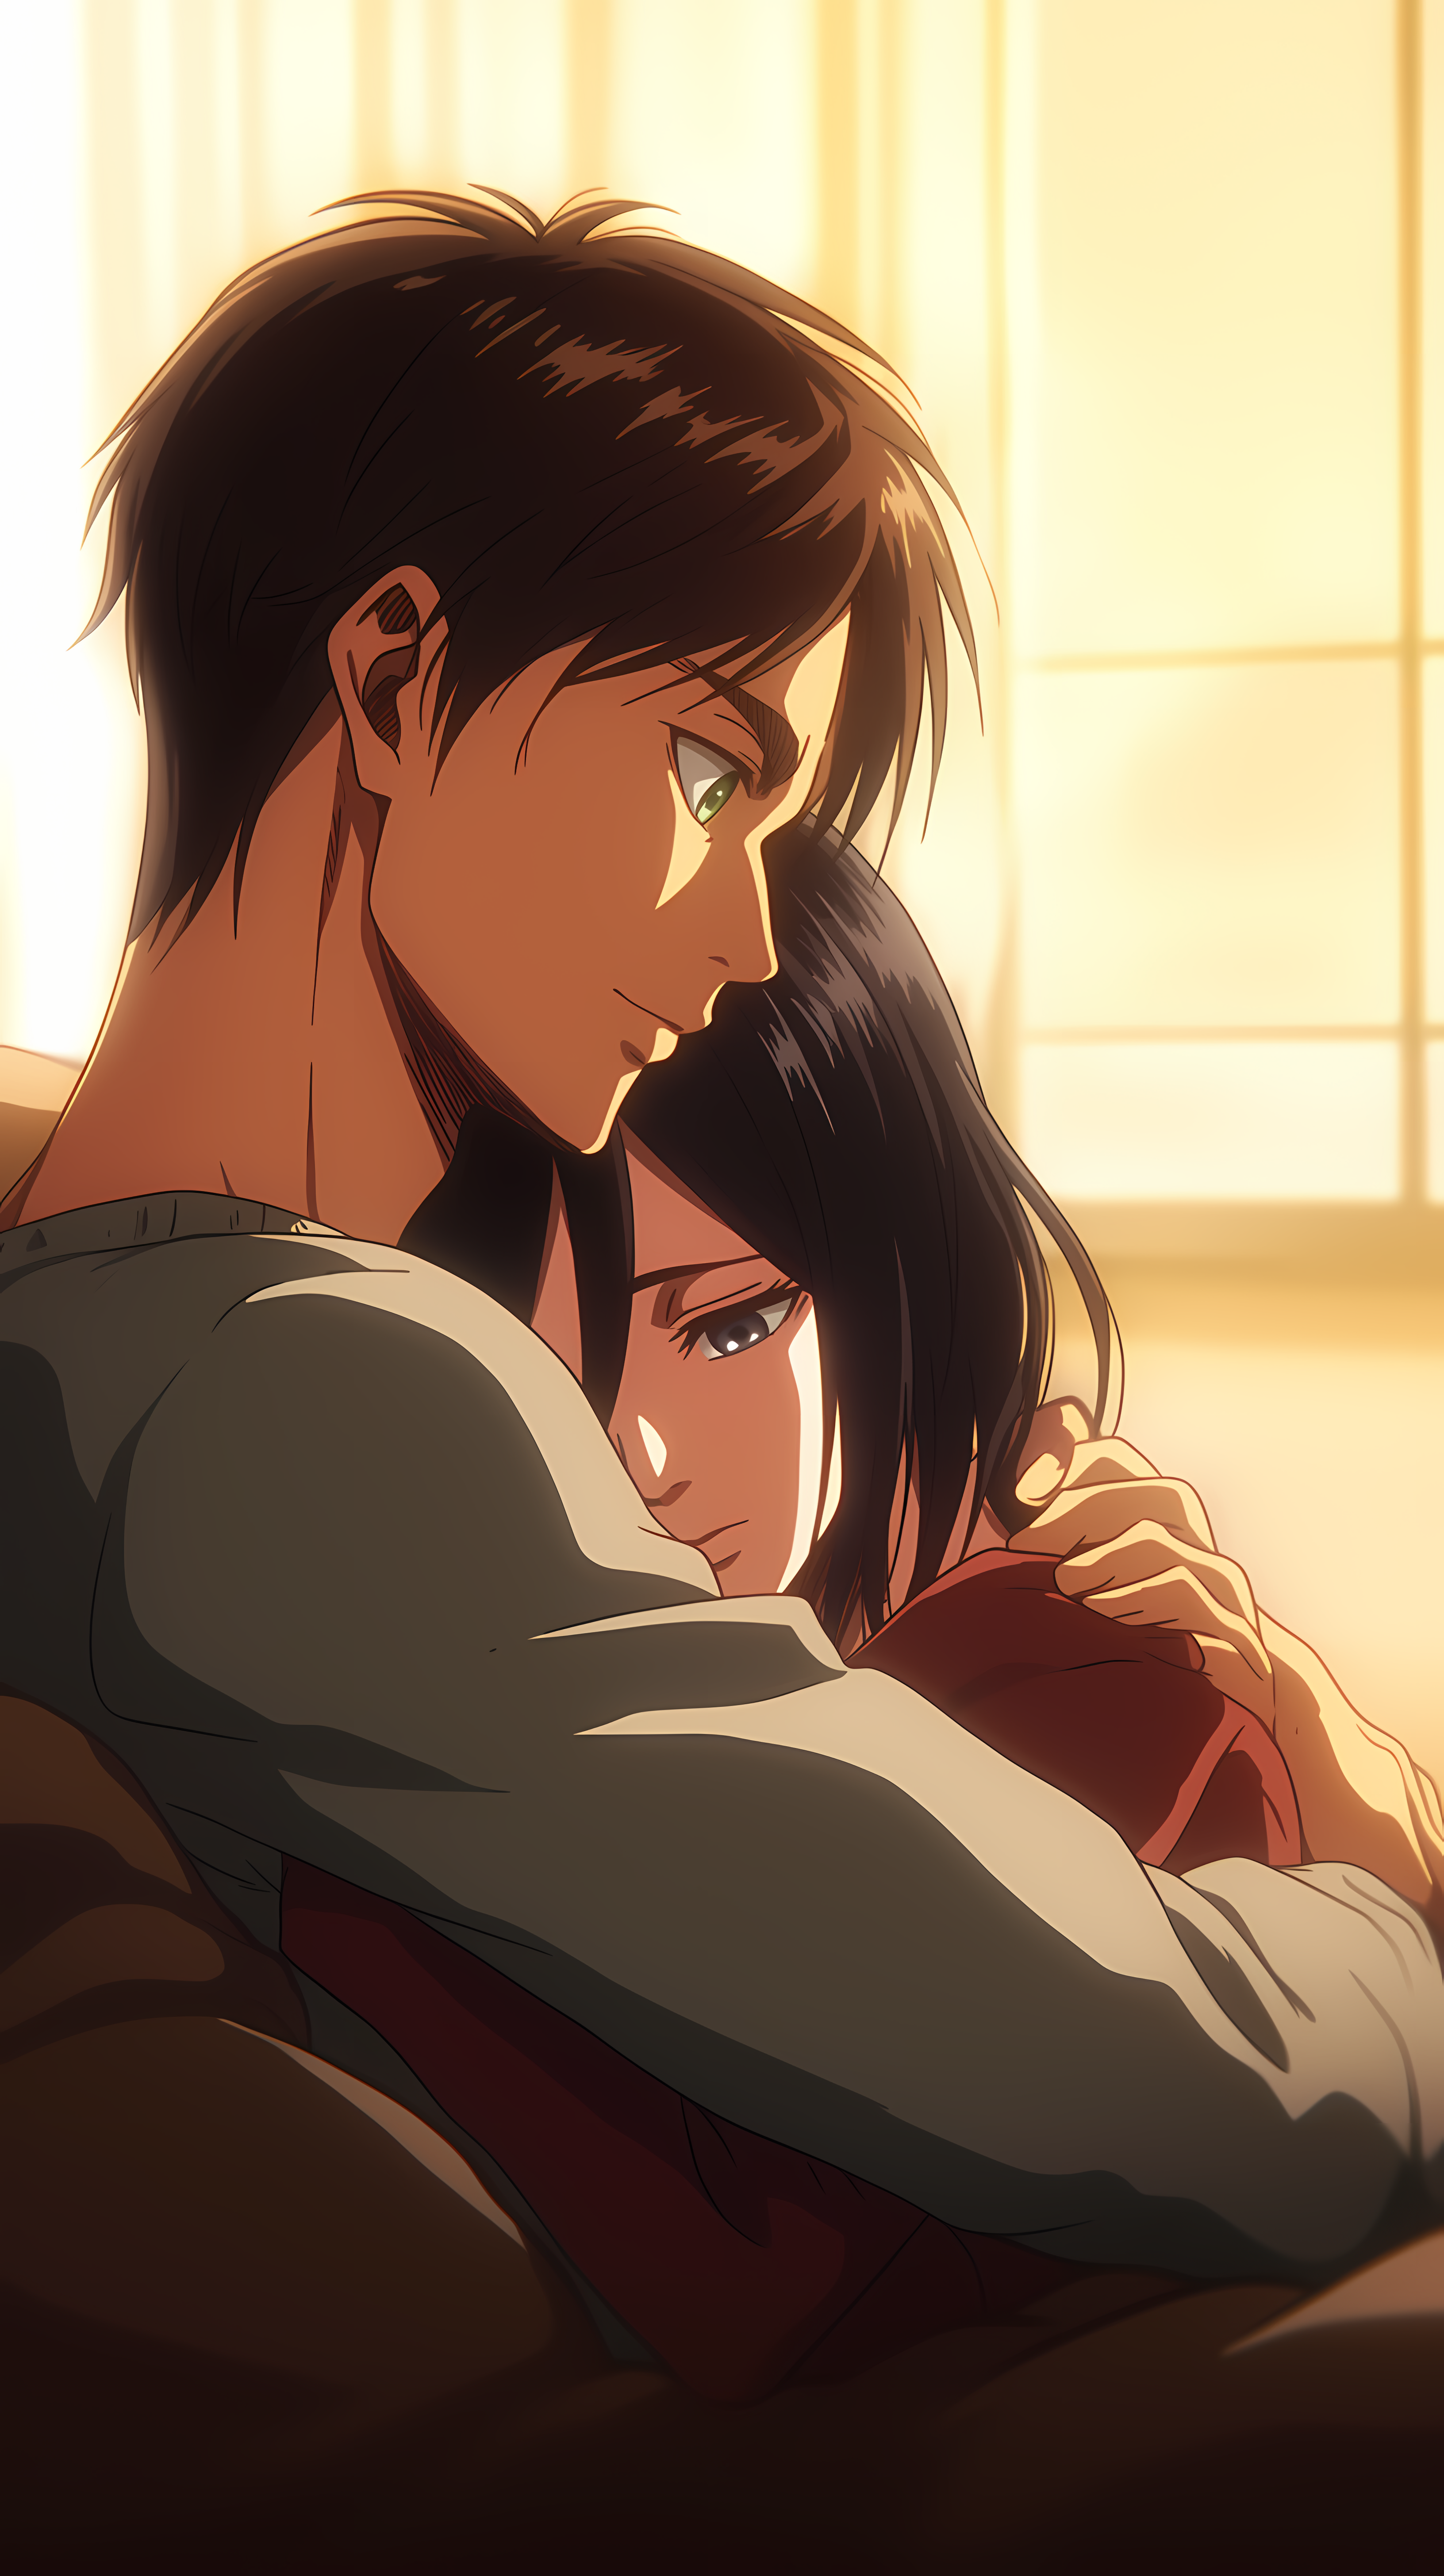 Anime 3264x5824 cuddle Mikasa Ackerman Shingeki no Kyojin Eren Jeager Eternal Love AI art